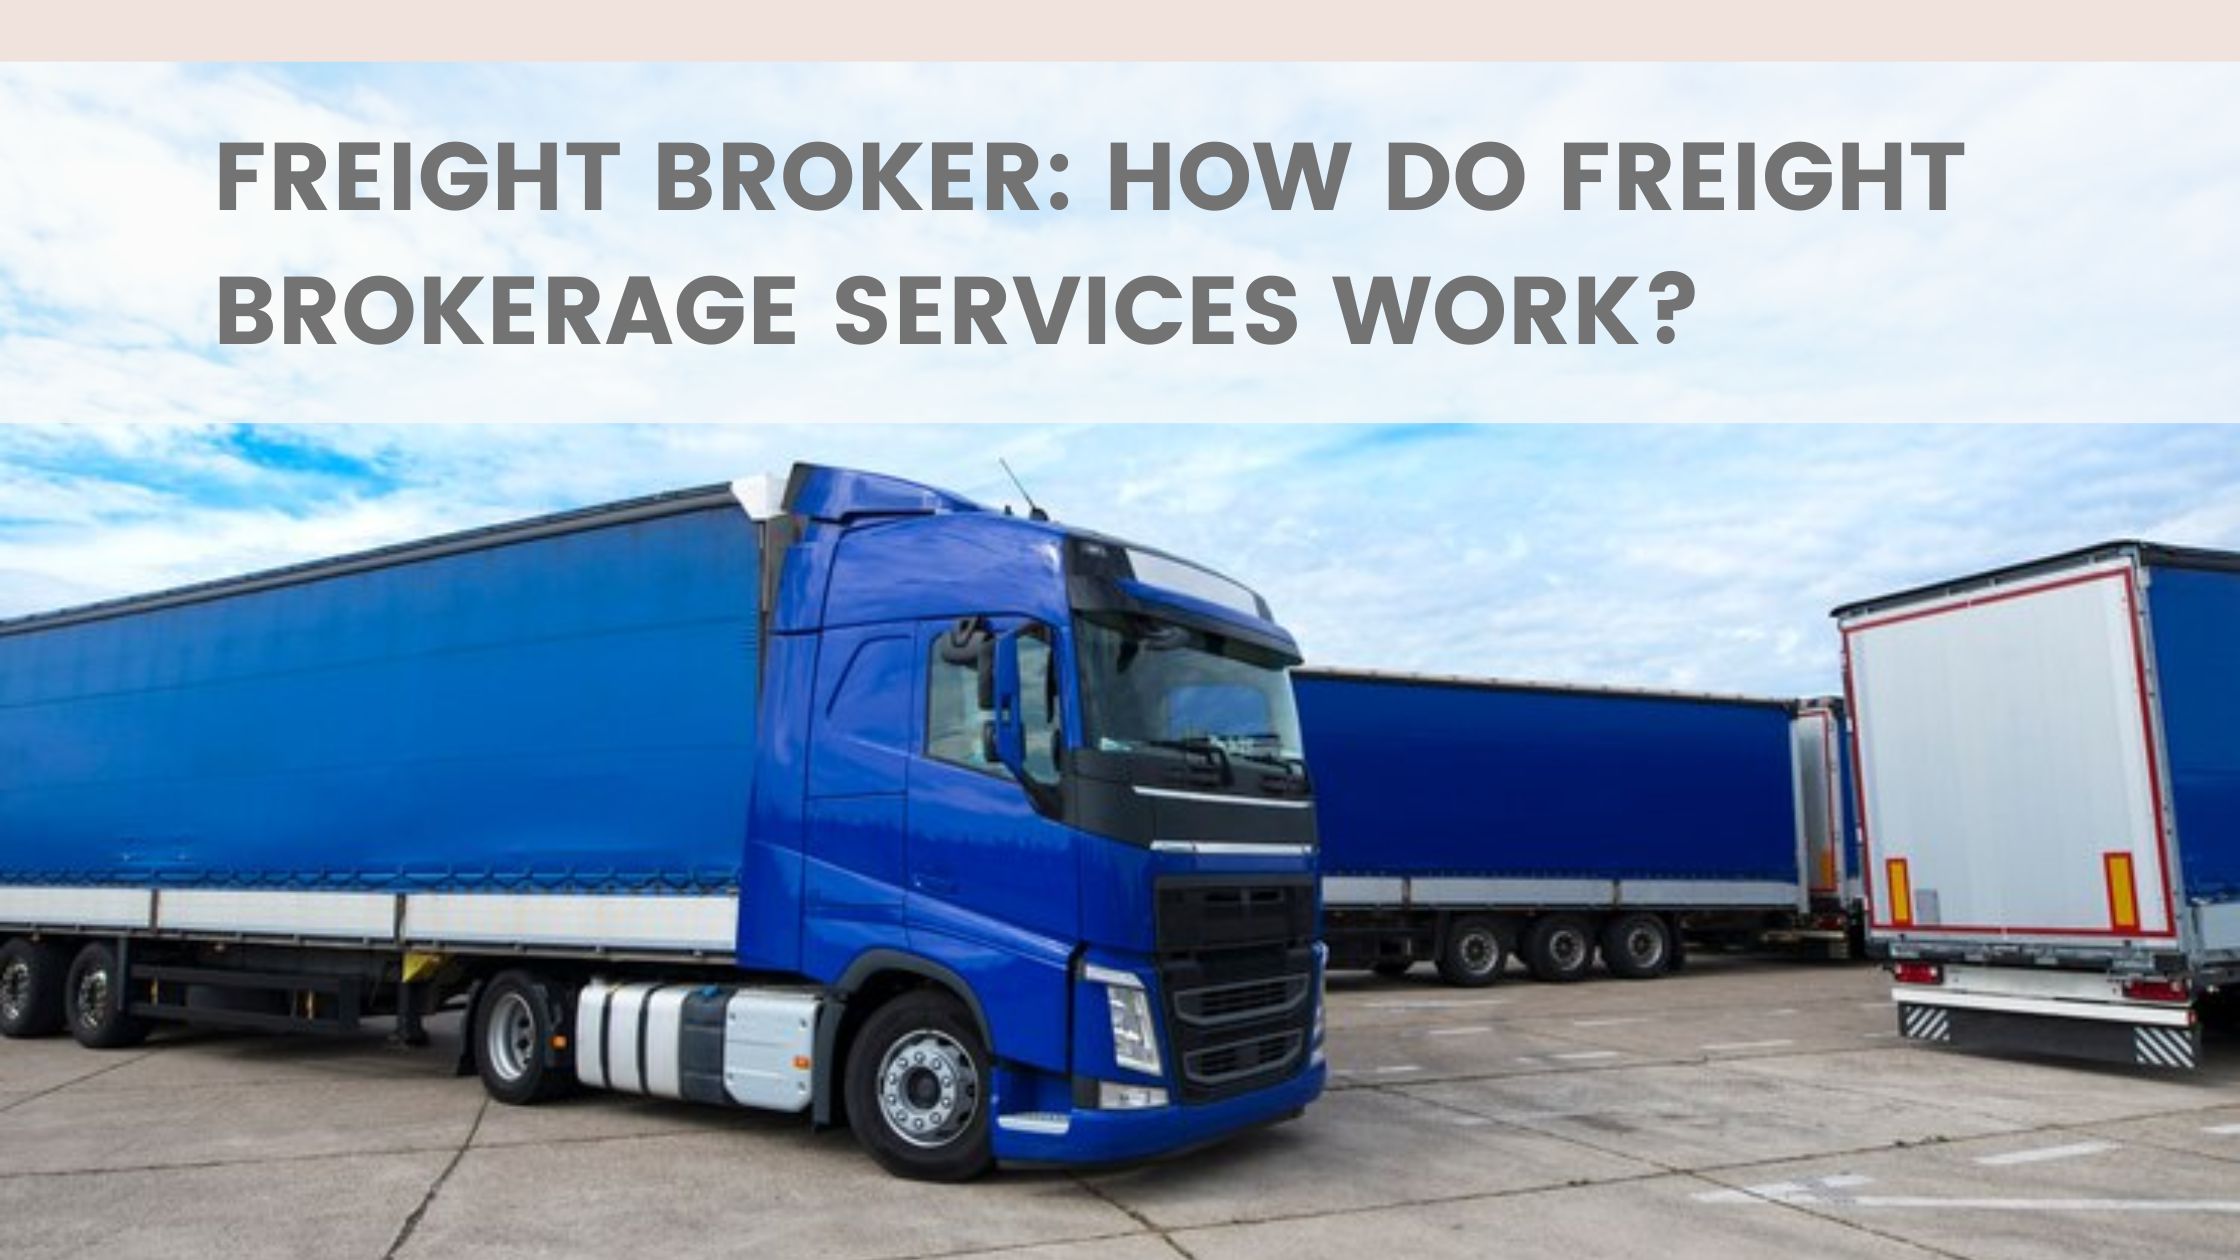 Freight Broker: How Do Freight Brokerage Services Work?